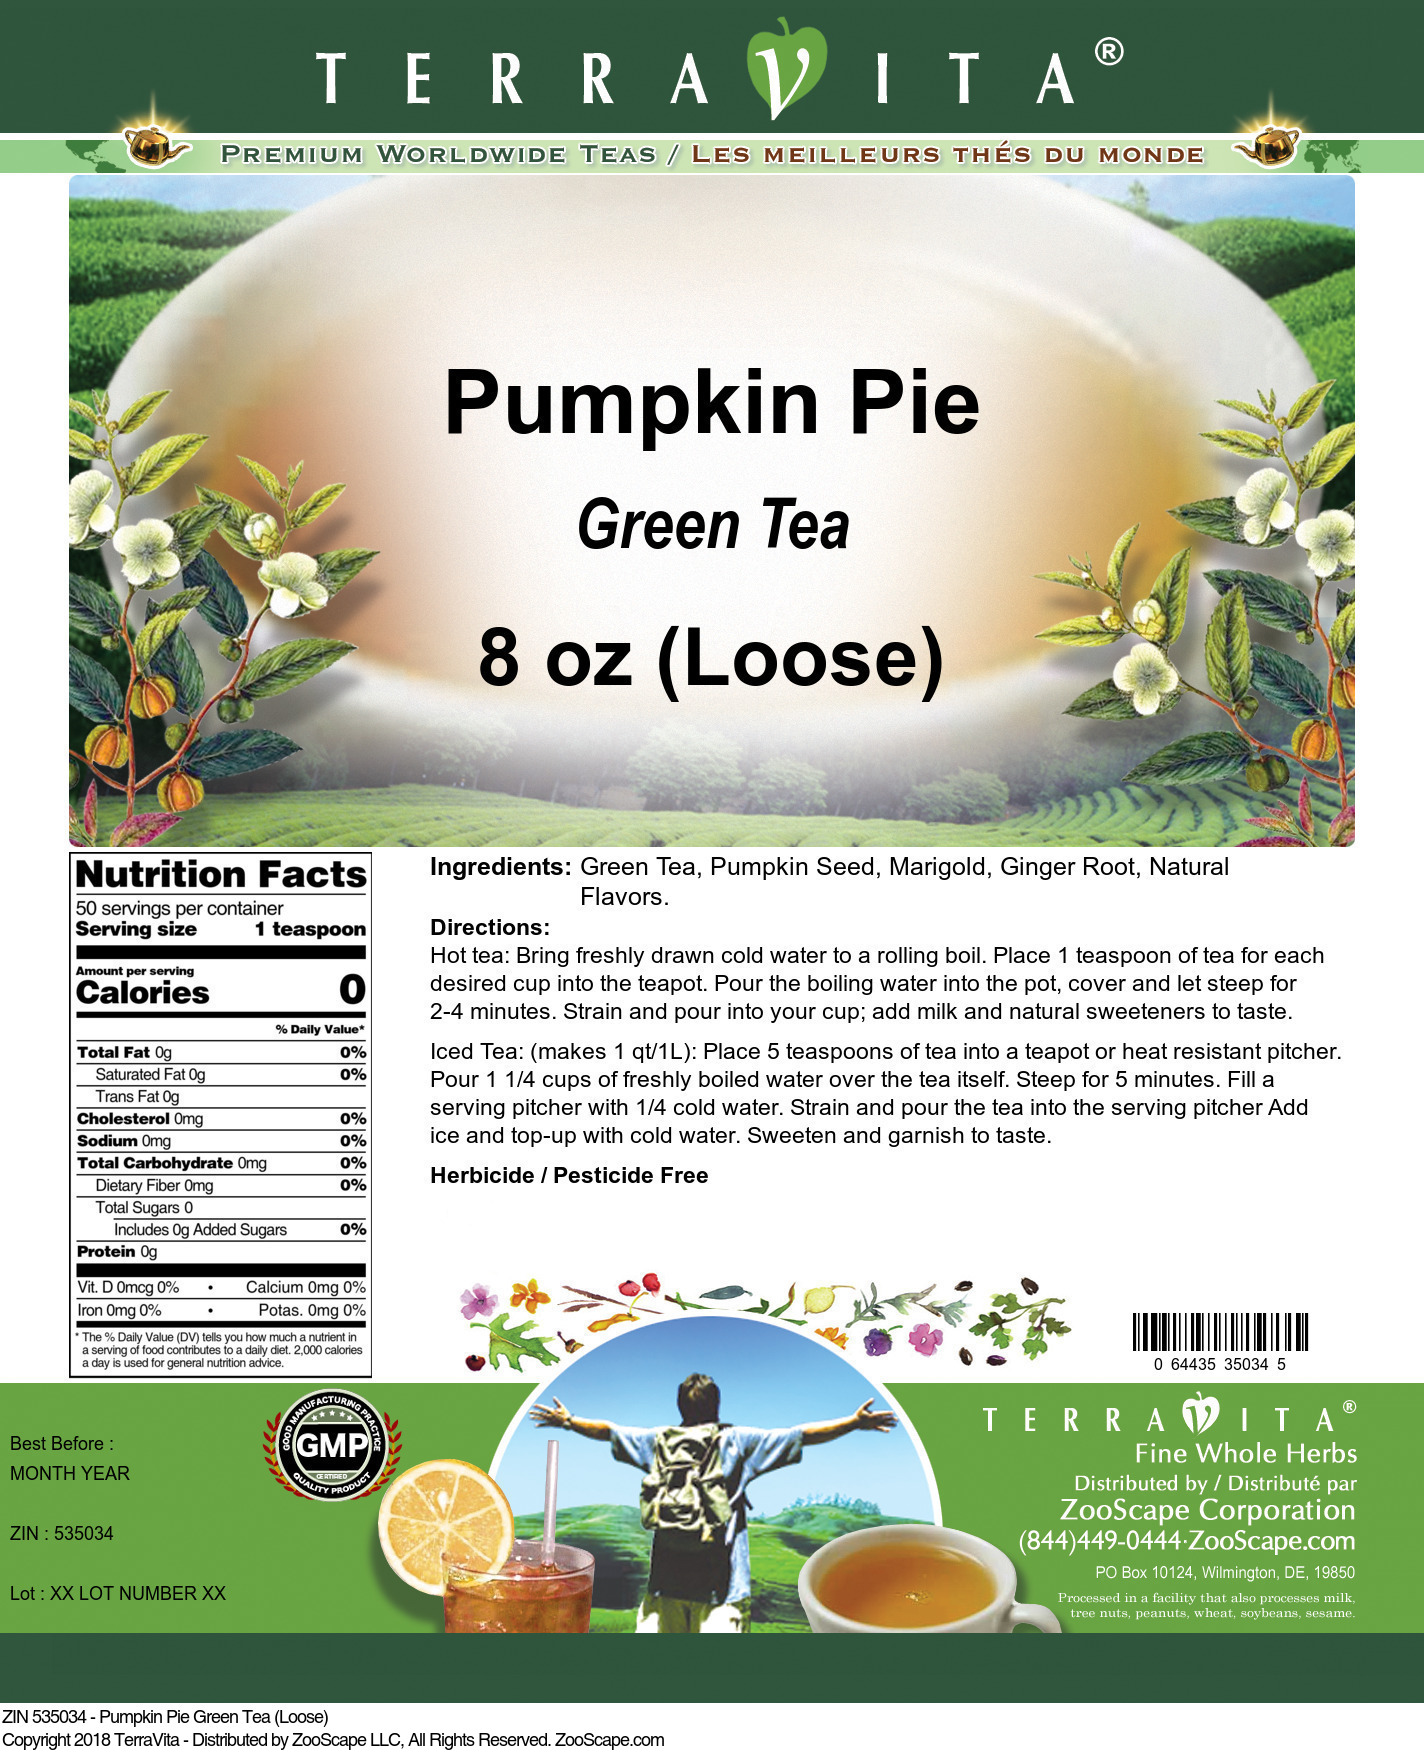 Pumpkin Pie Green Tea (Loose) - Label